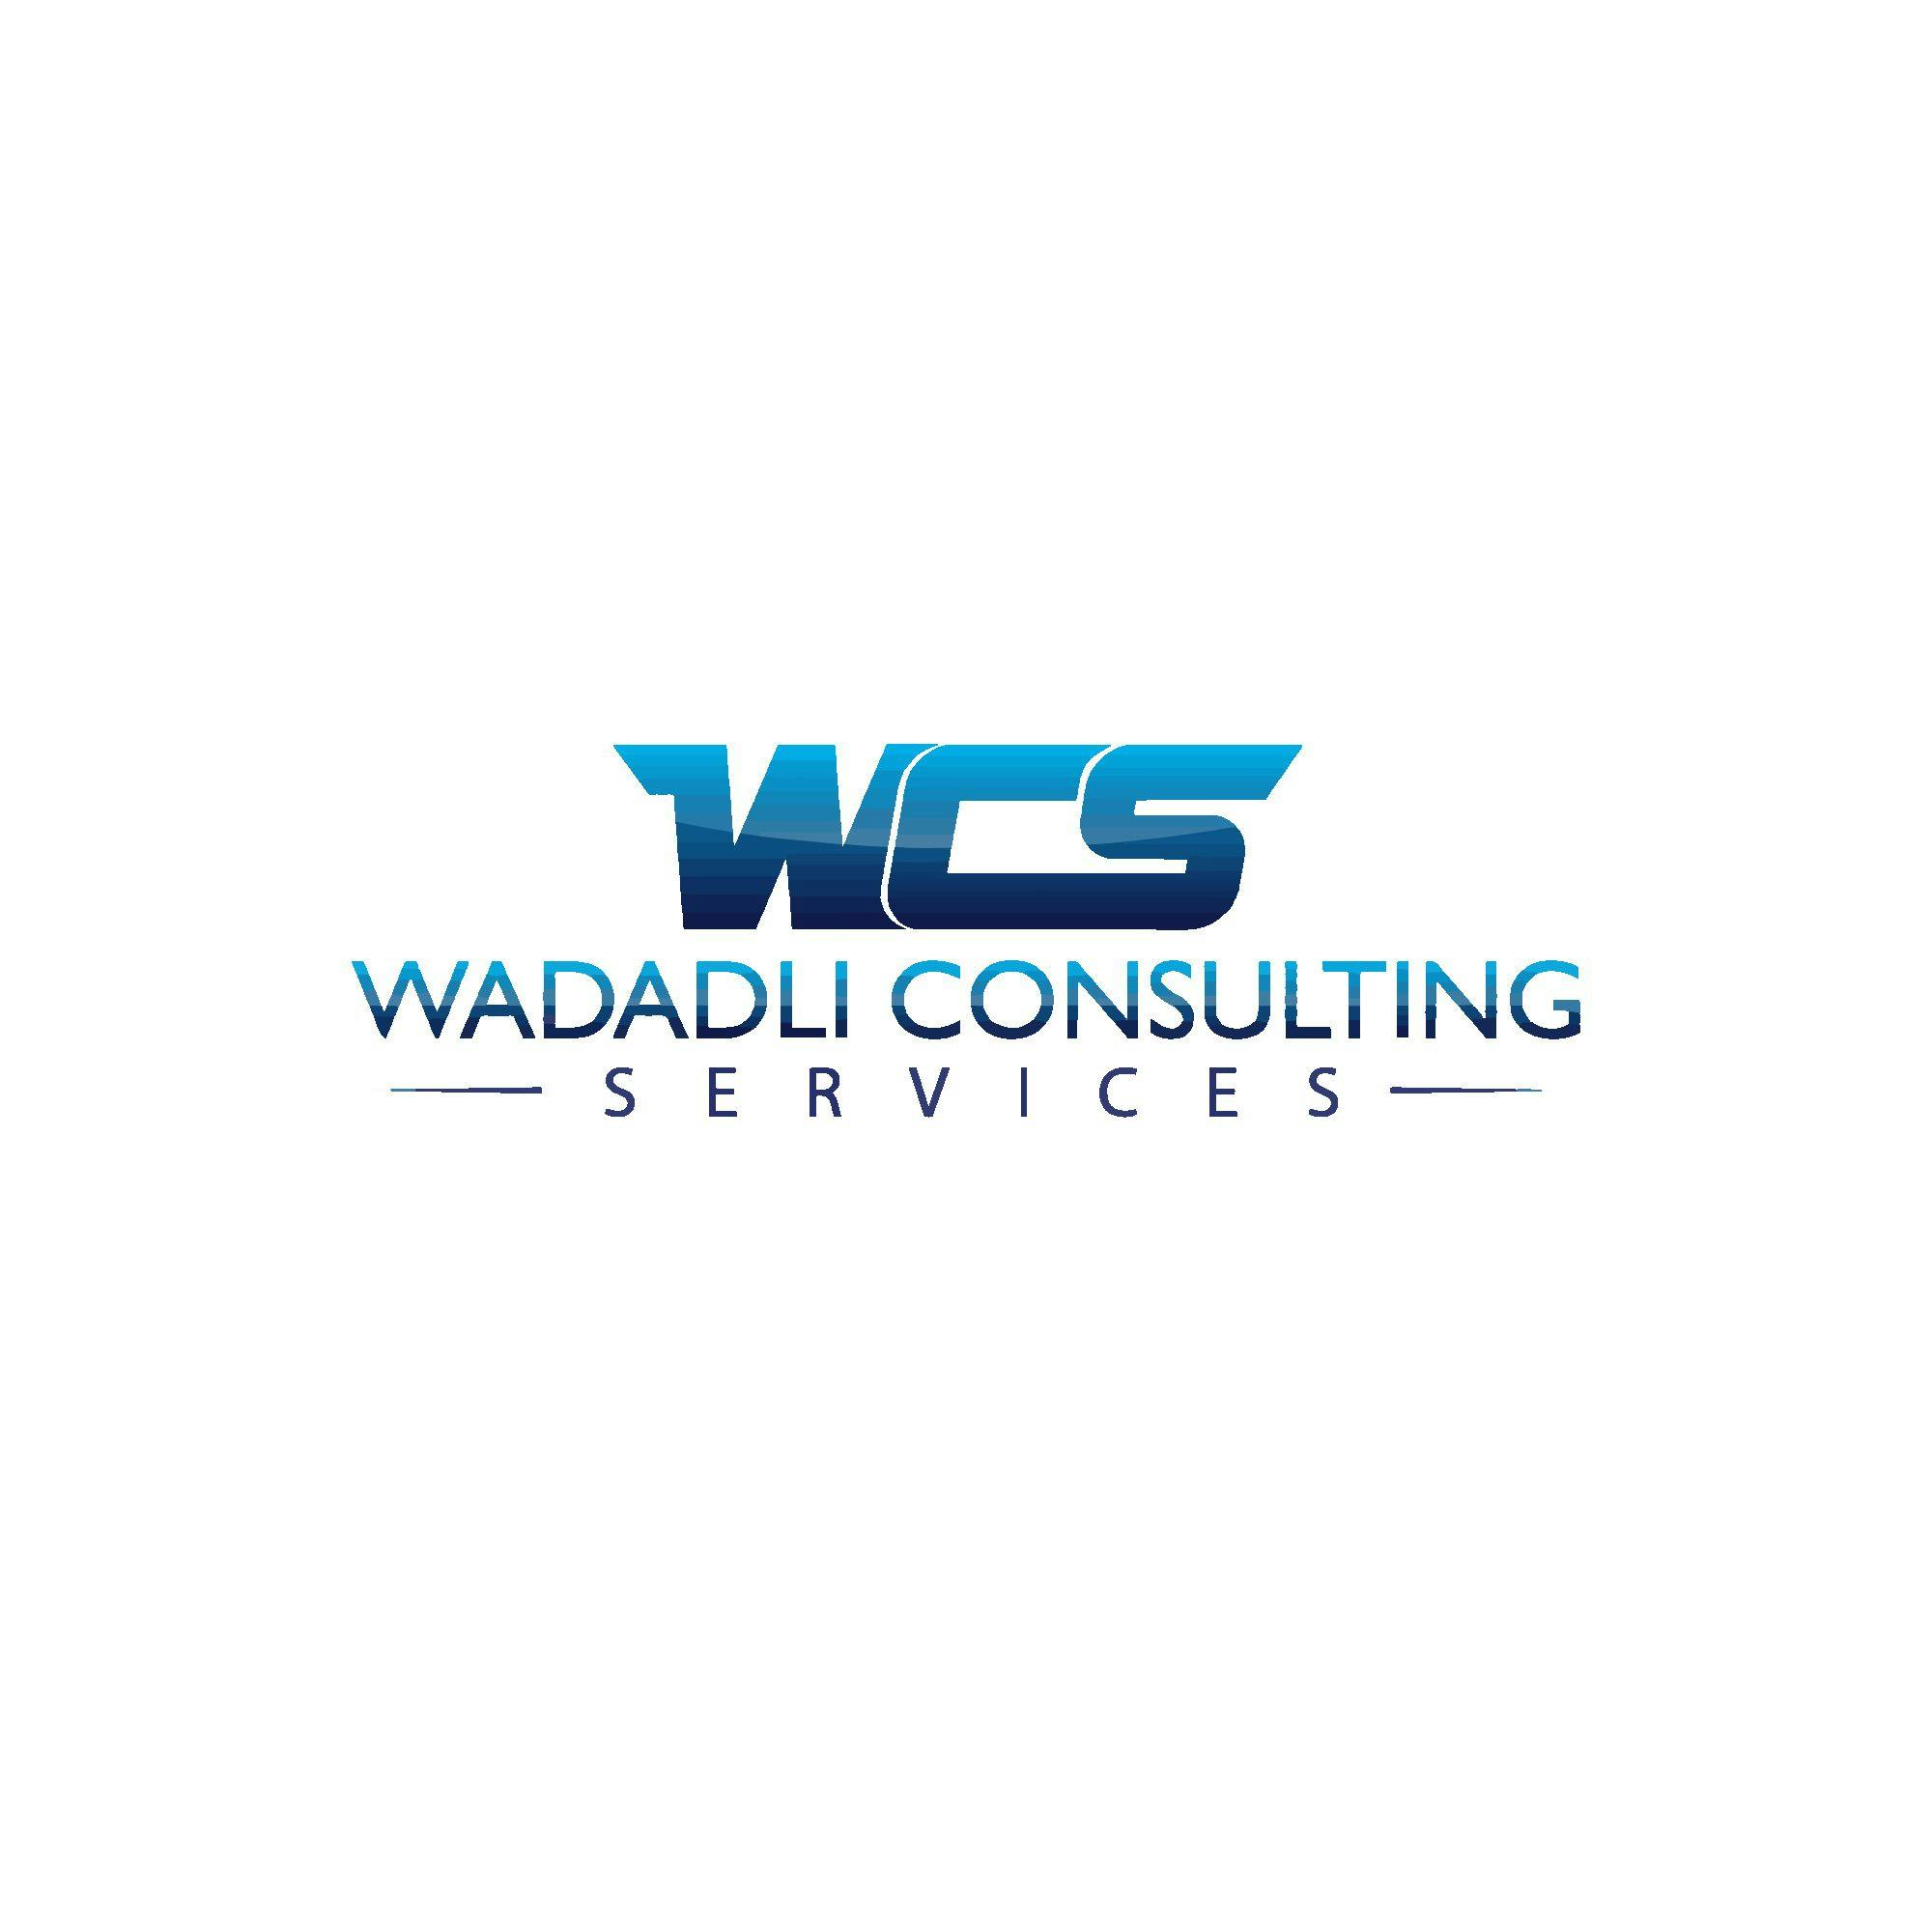 Wadadli Consulting Services logo